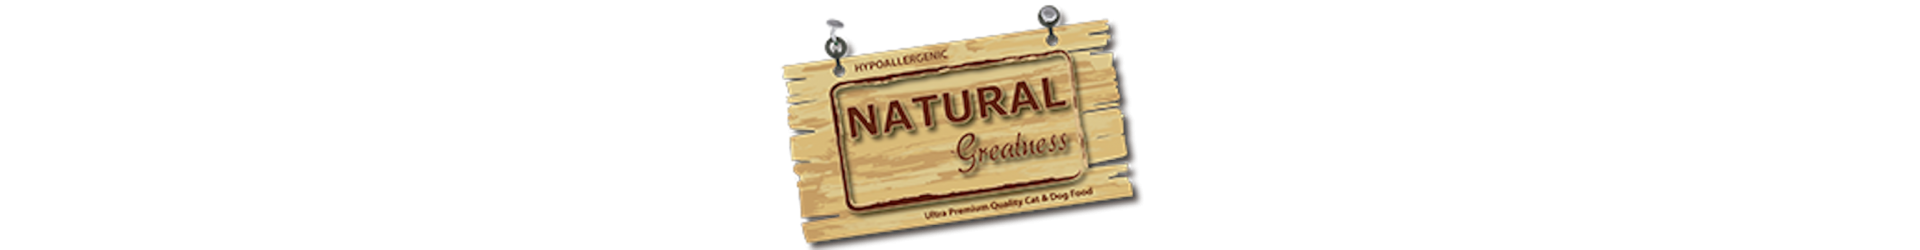 Natural Greatness Gatos - MundoHuella.com